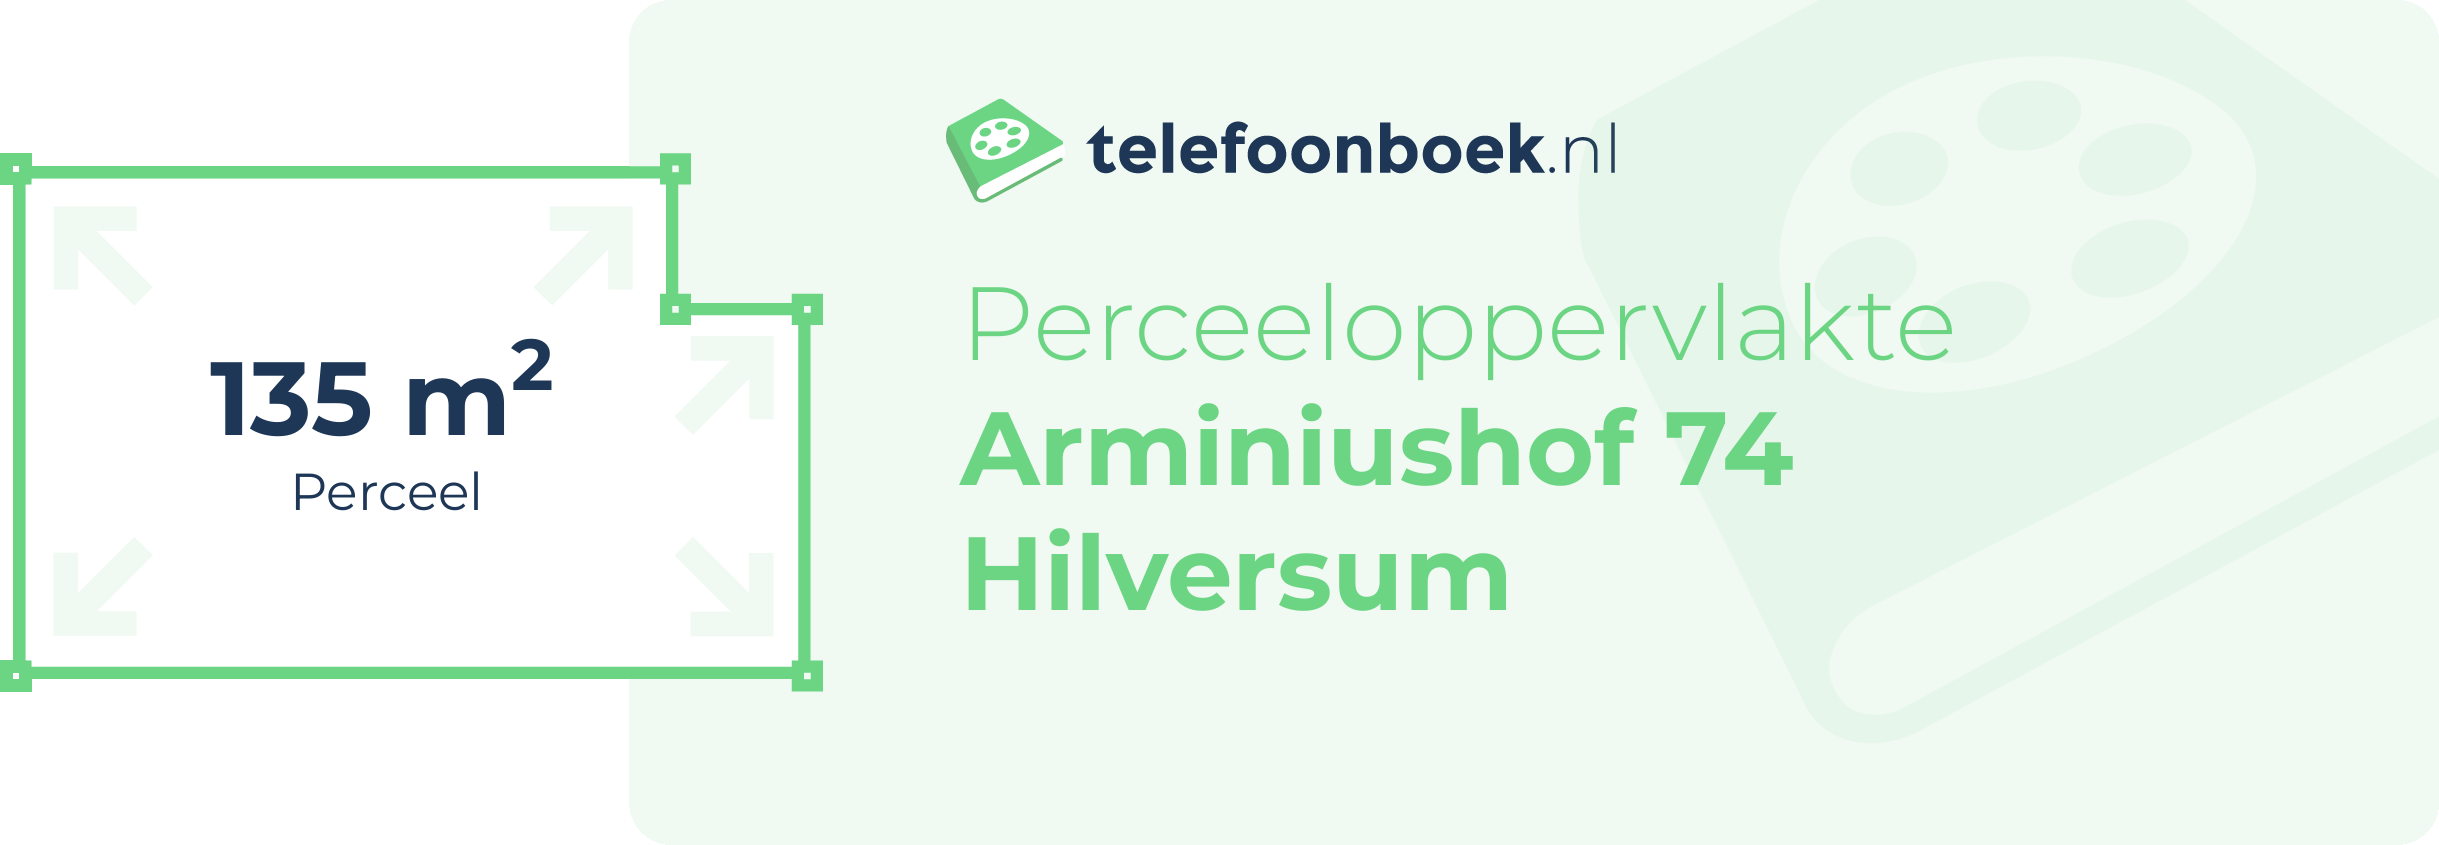 Perceeloppervlakte Arminiushof 74 Hilversum